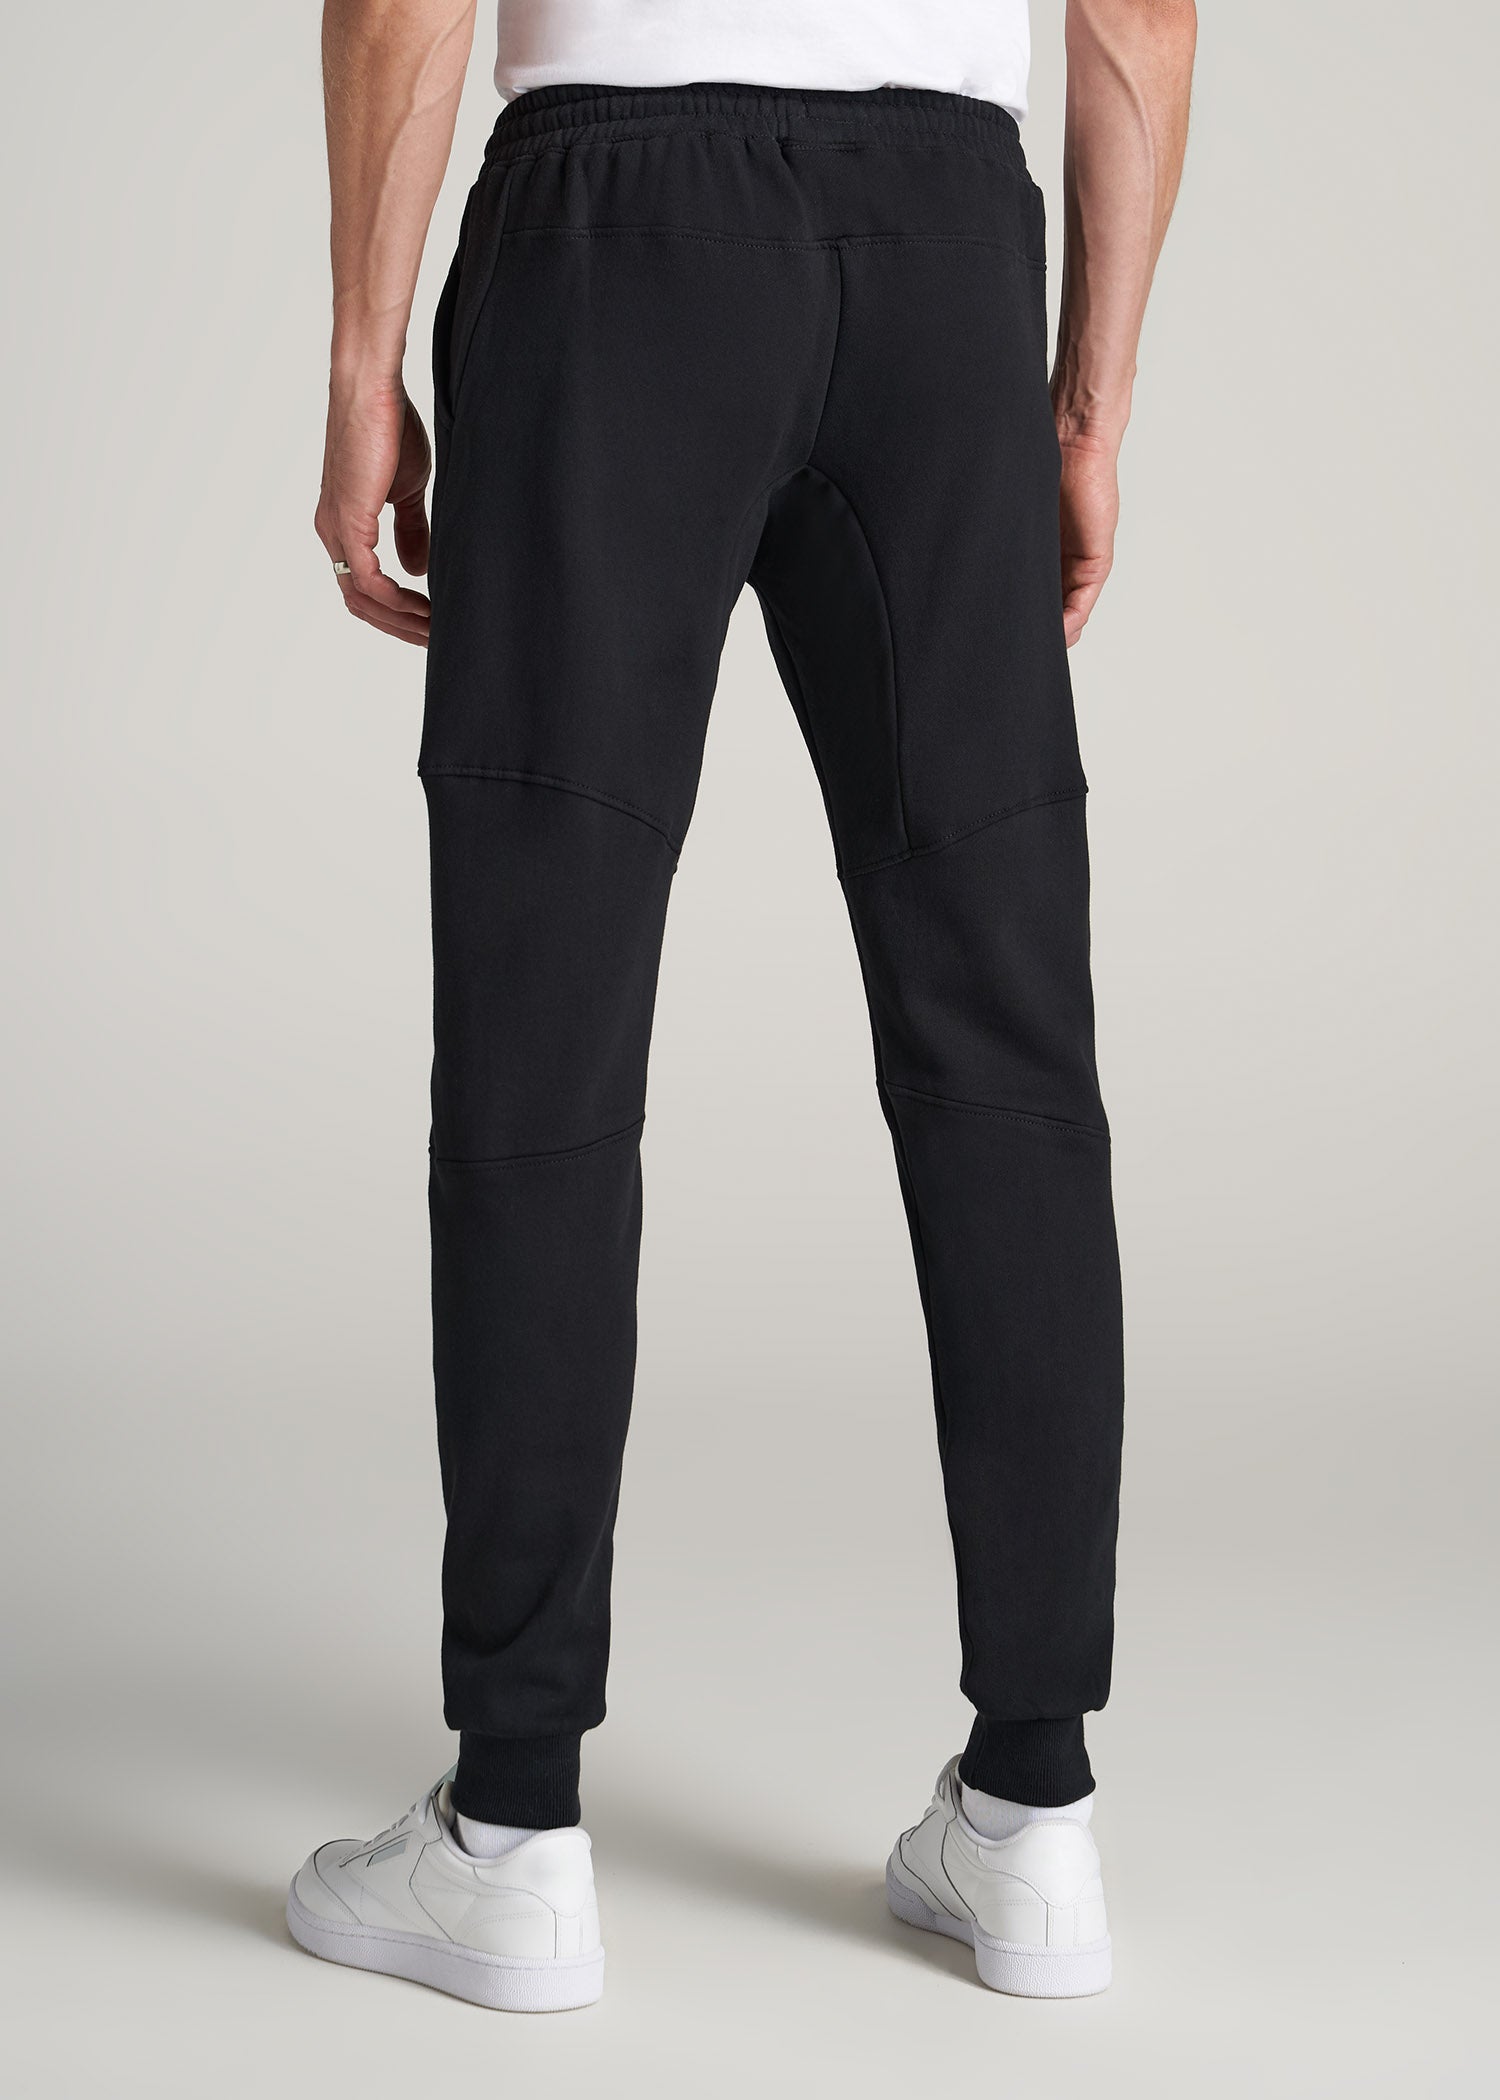 Black Sweatpants for Tall Guys: Men's Tall Fleece Black Jogger